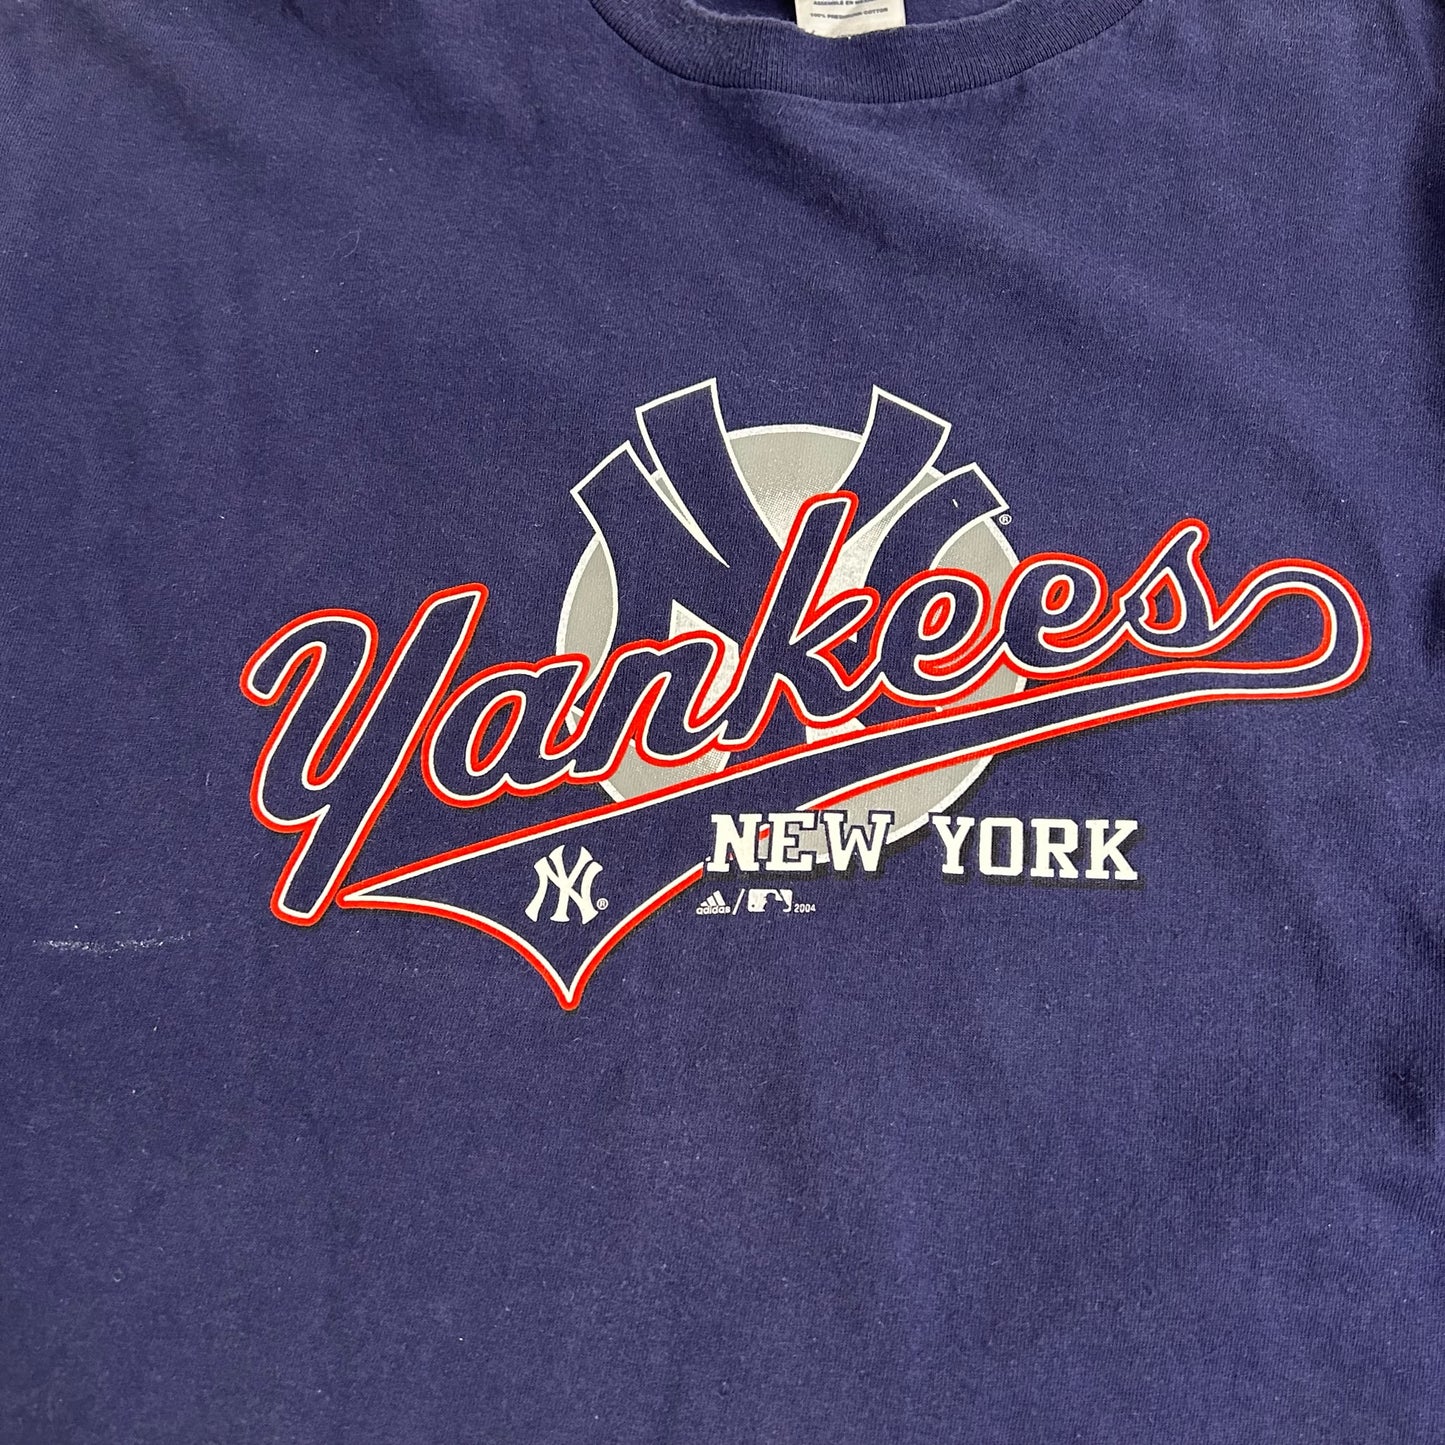 2004 New York Yankees MLB T-Shirt size XXL